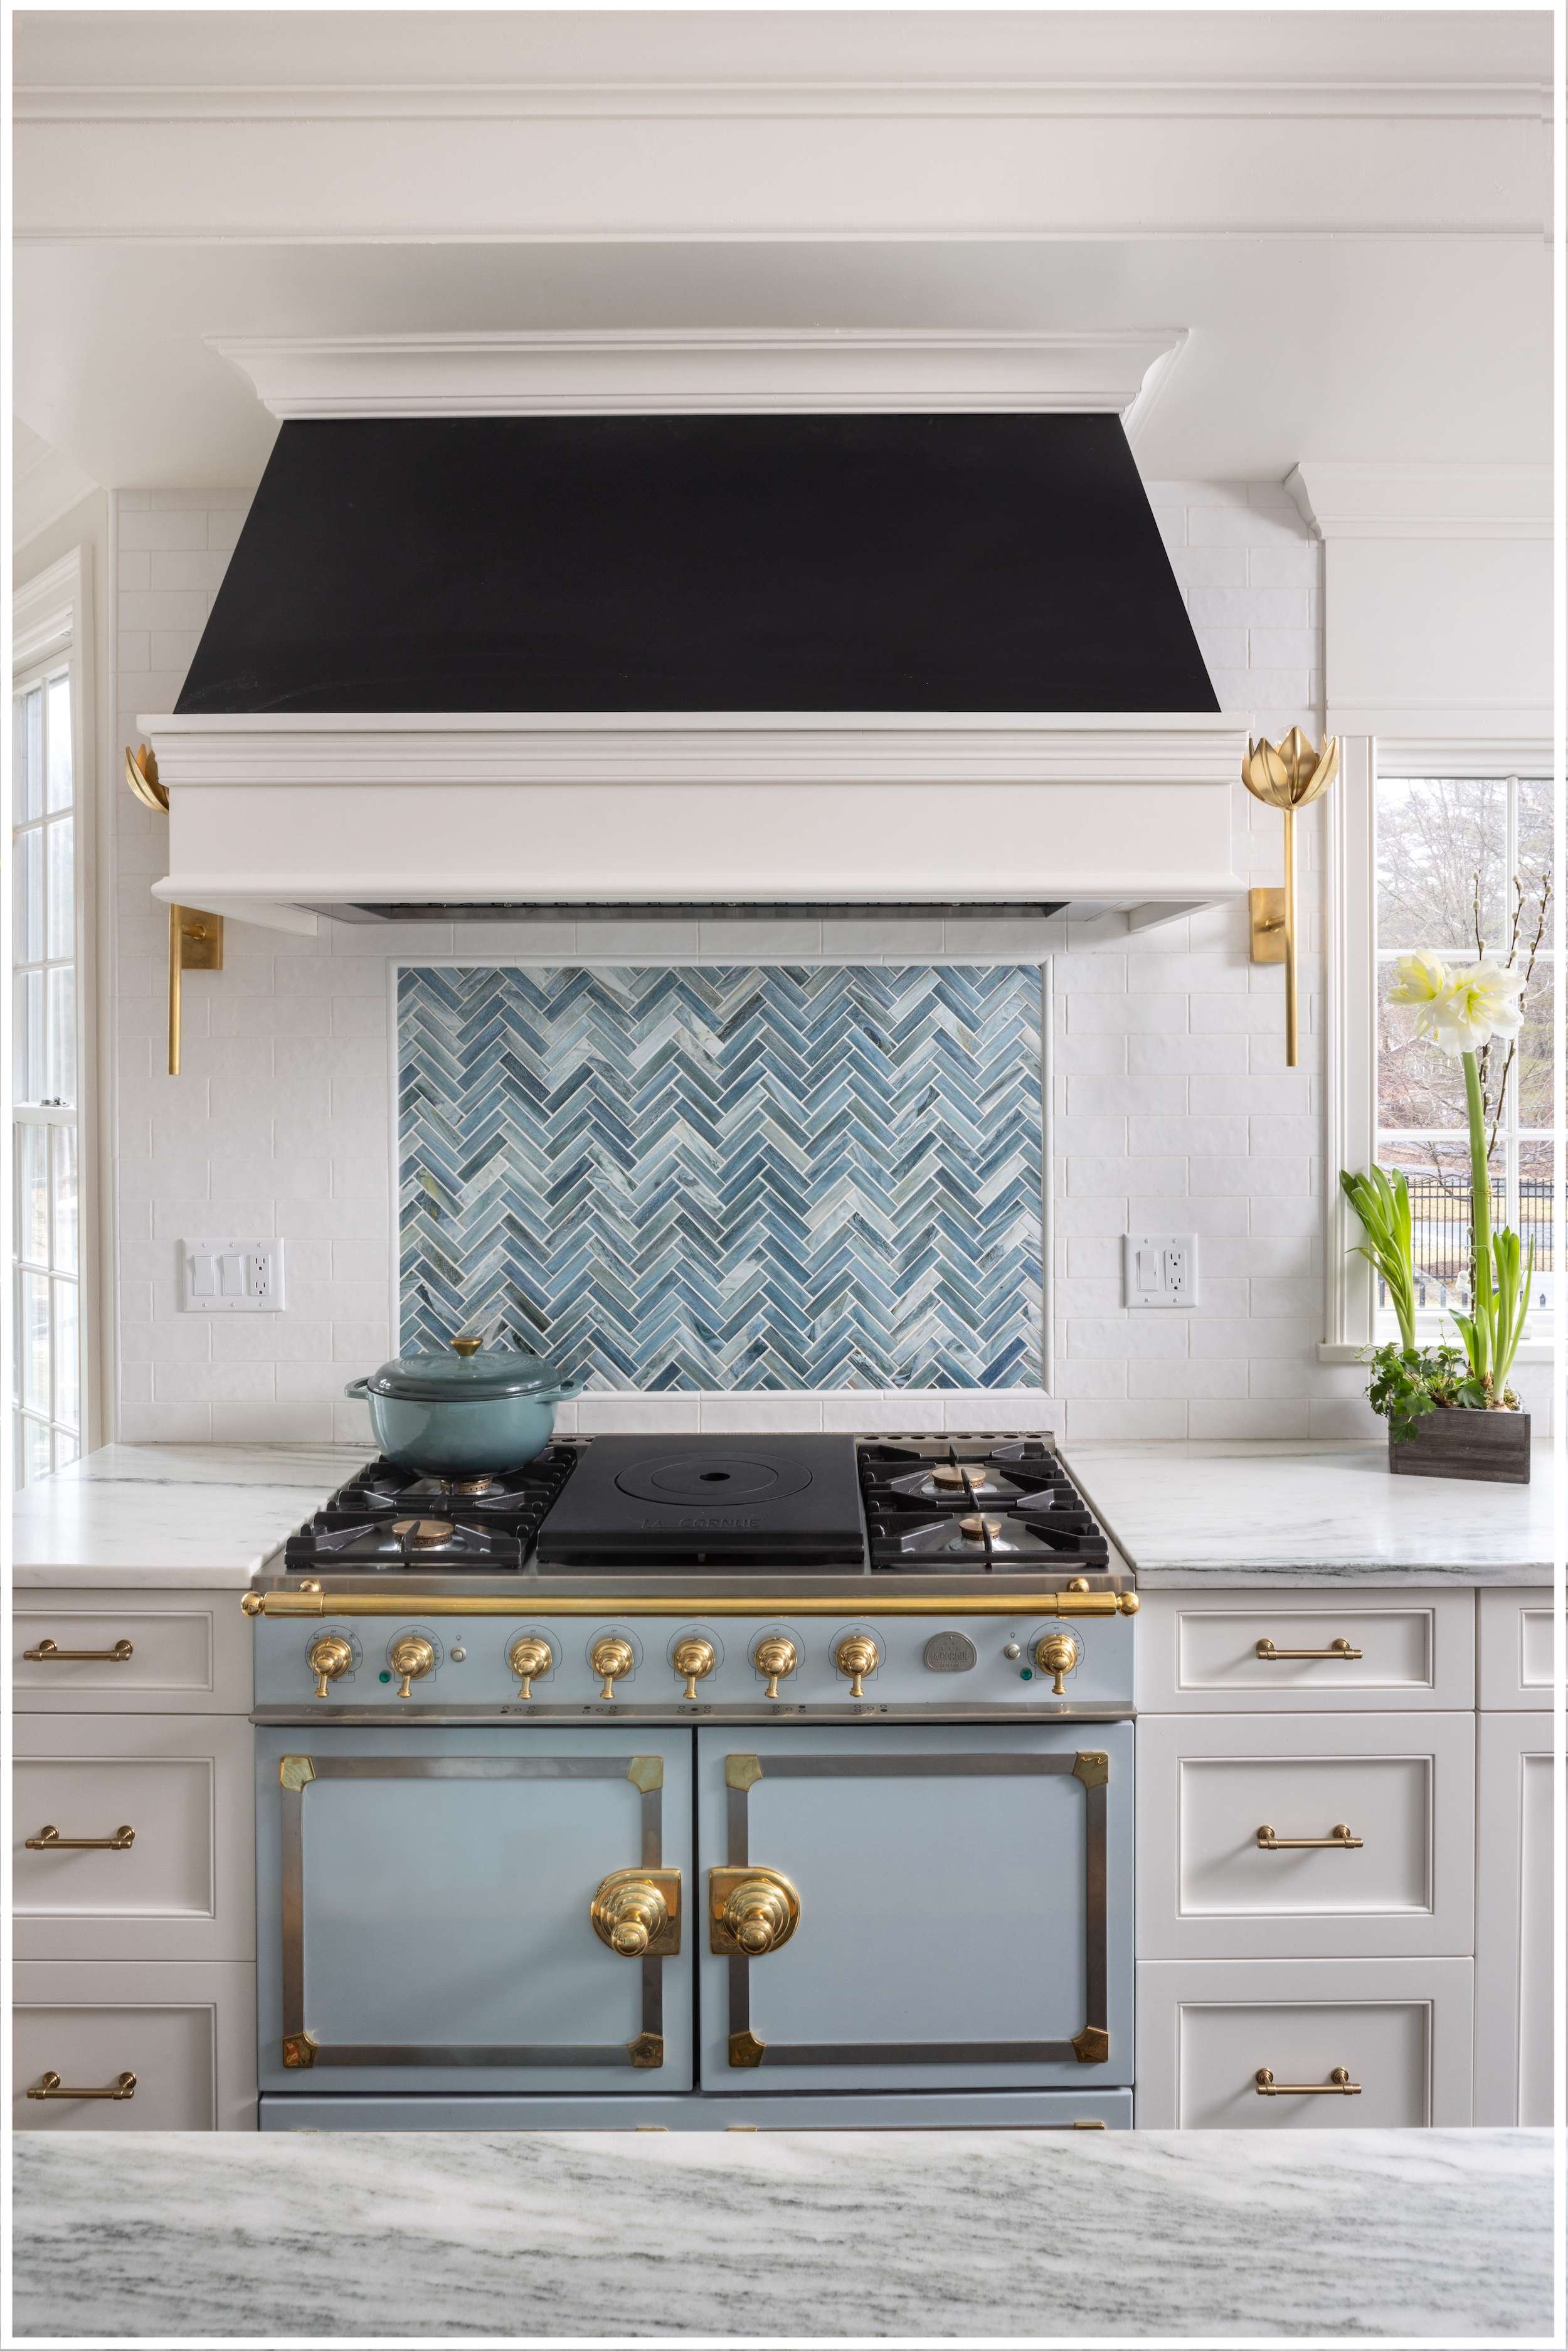 Fireside Gourmet Kitchen Range + Hood + Backsplash Detail Sudbury MA KITCHENVISIONS residential space planning kitchen design.jpg